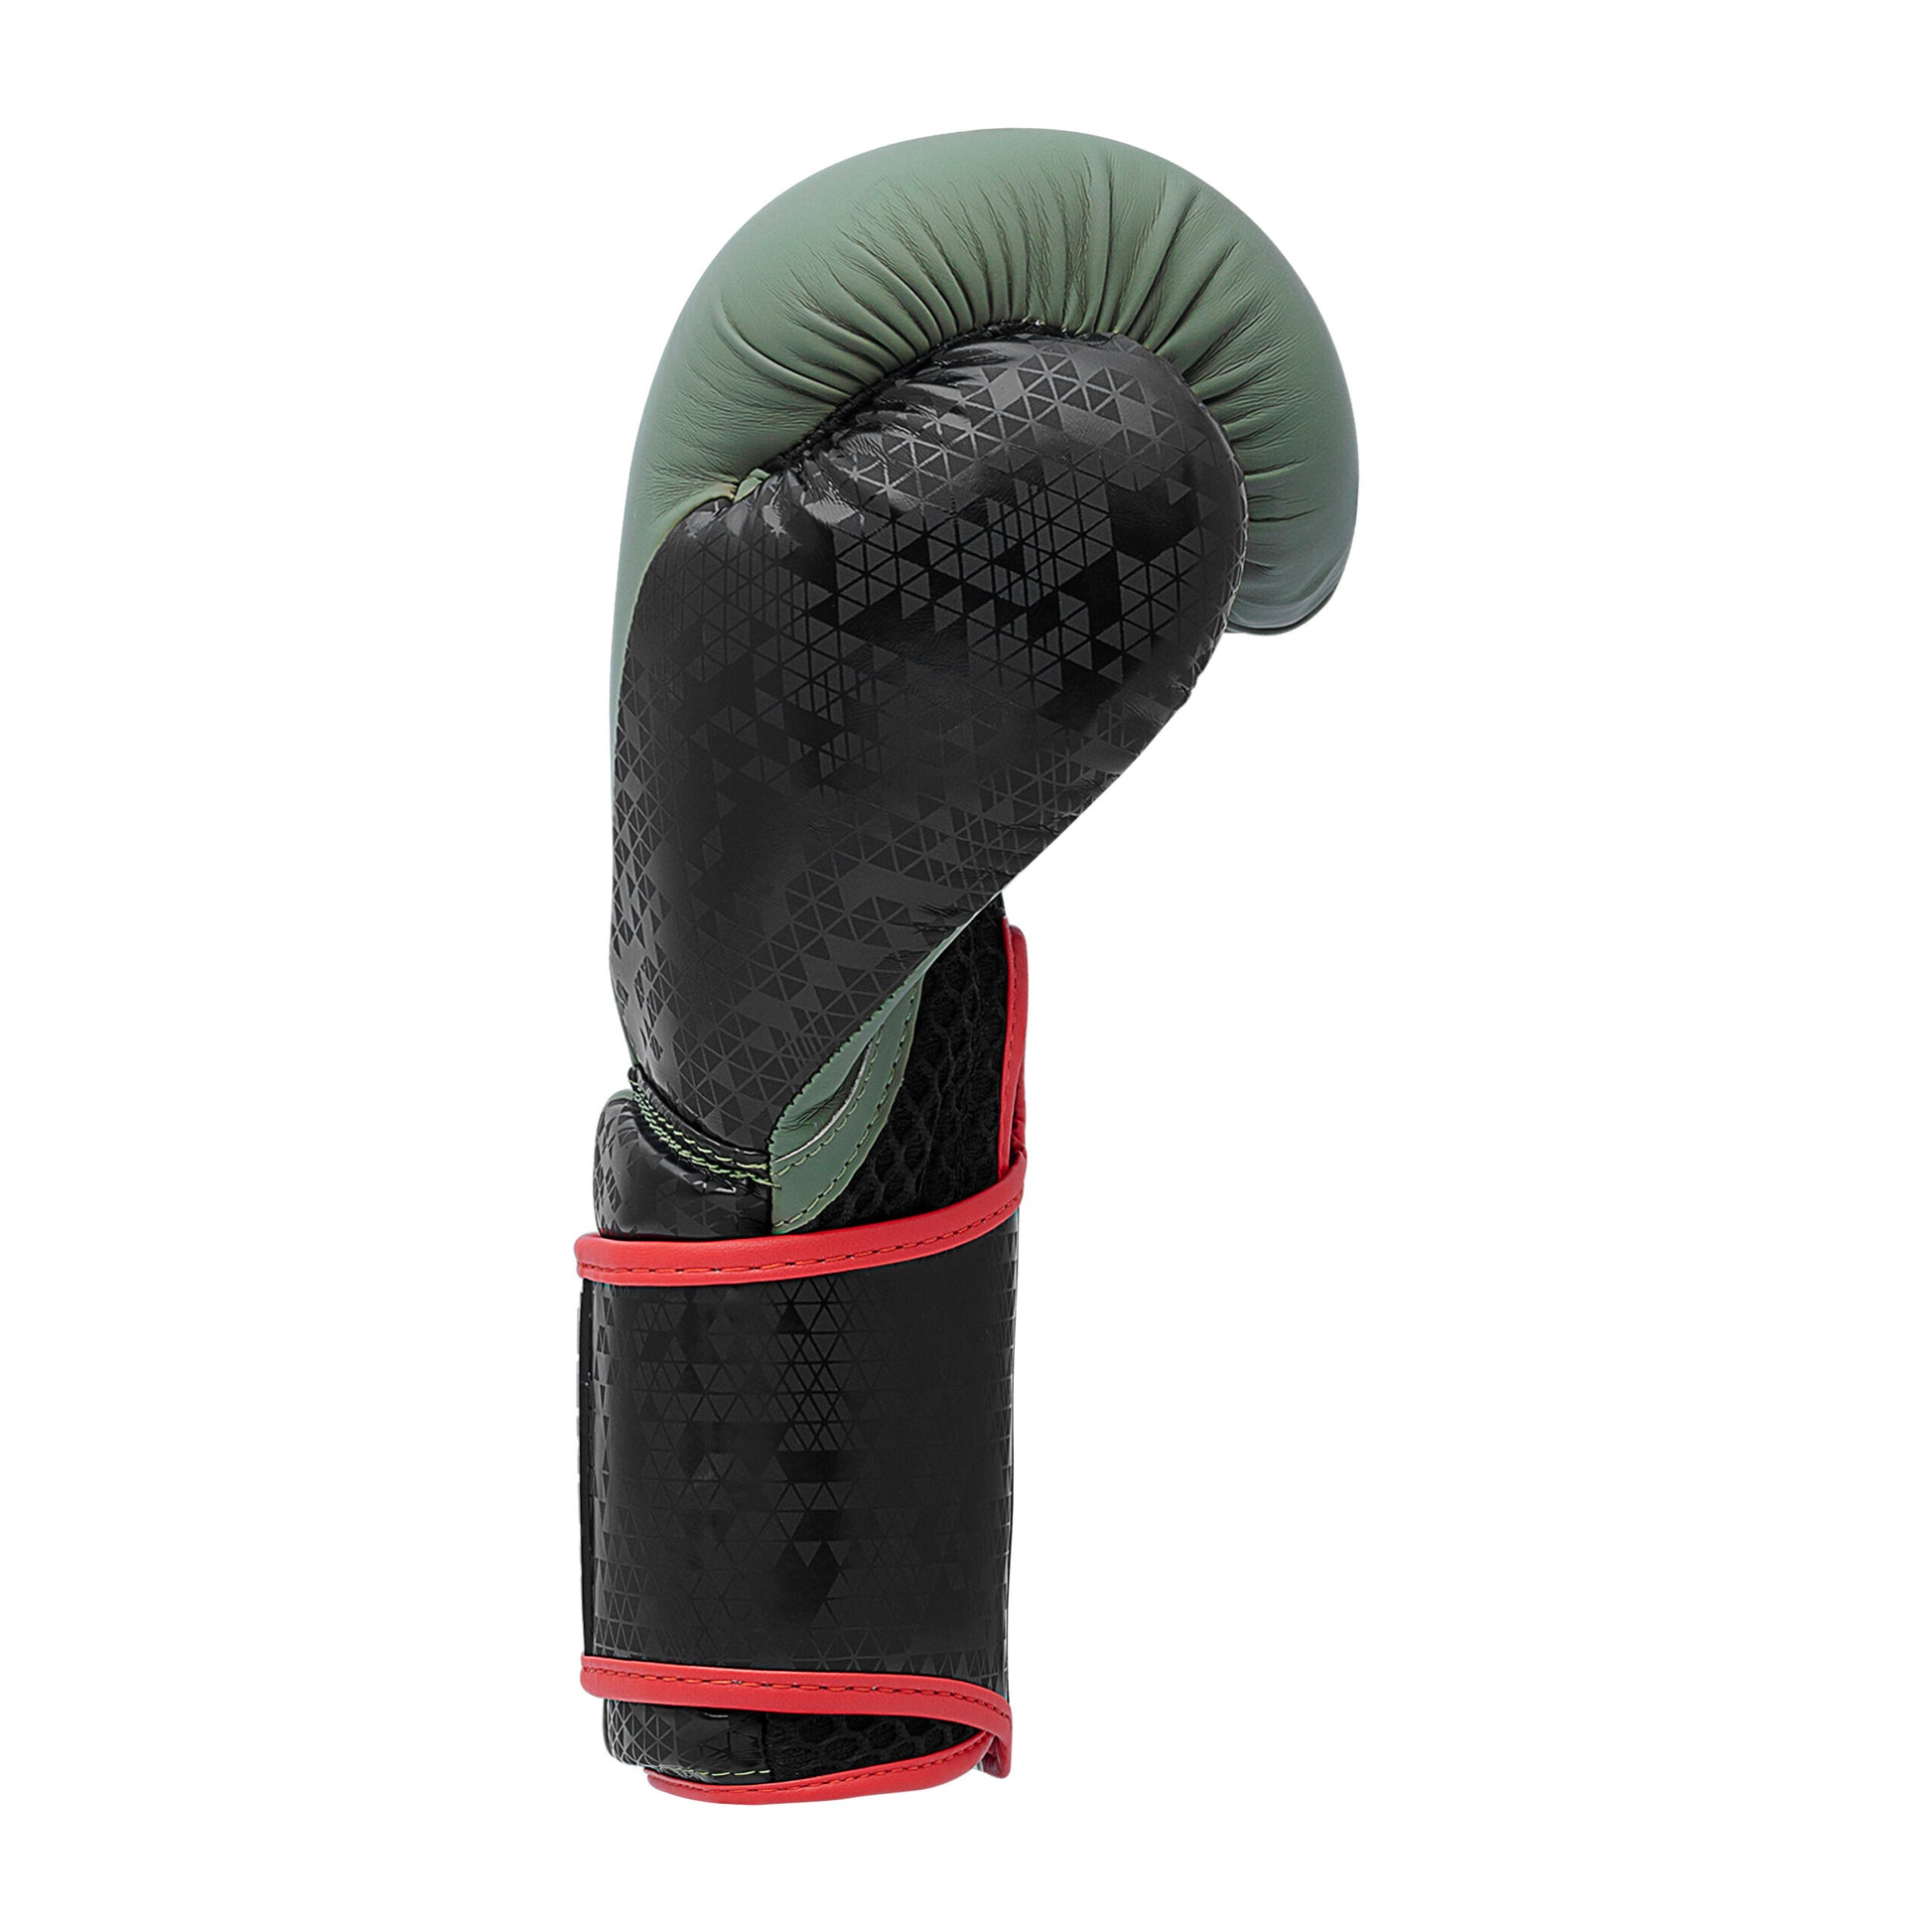 Adic50tg Combat 50 Training Boxing Gloves Orbit Green Black 02